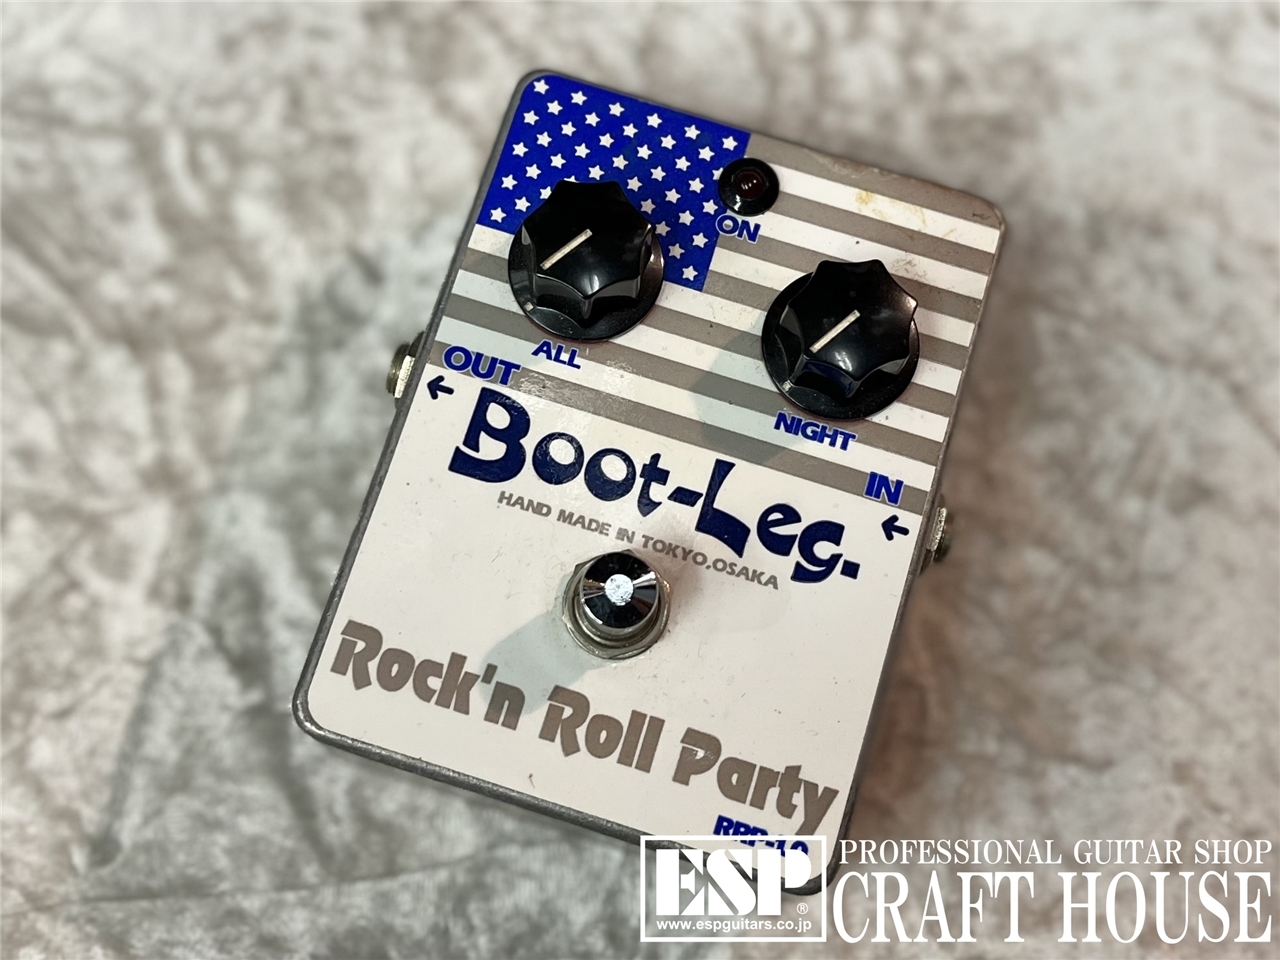 Boot-Leg Rock’n Roll Party  RRP-1.0